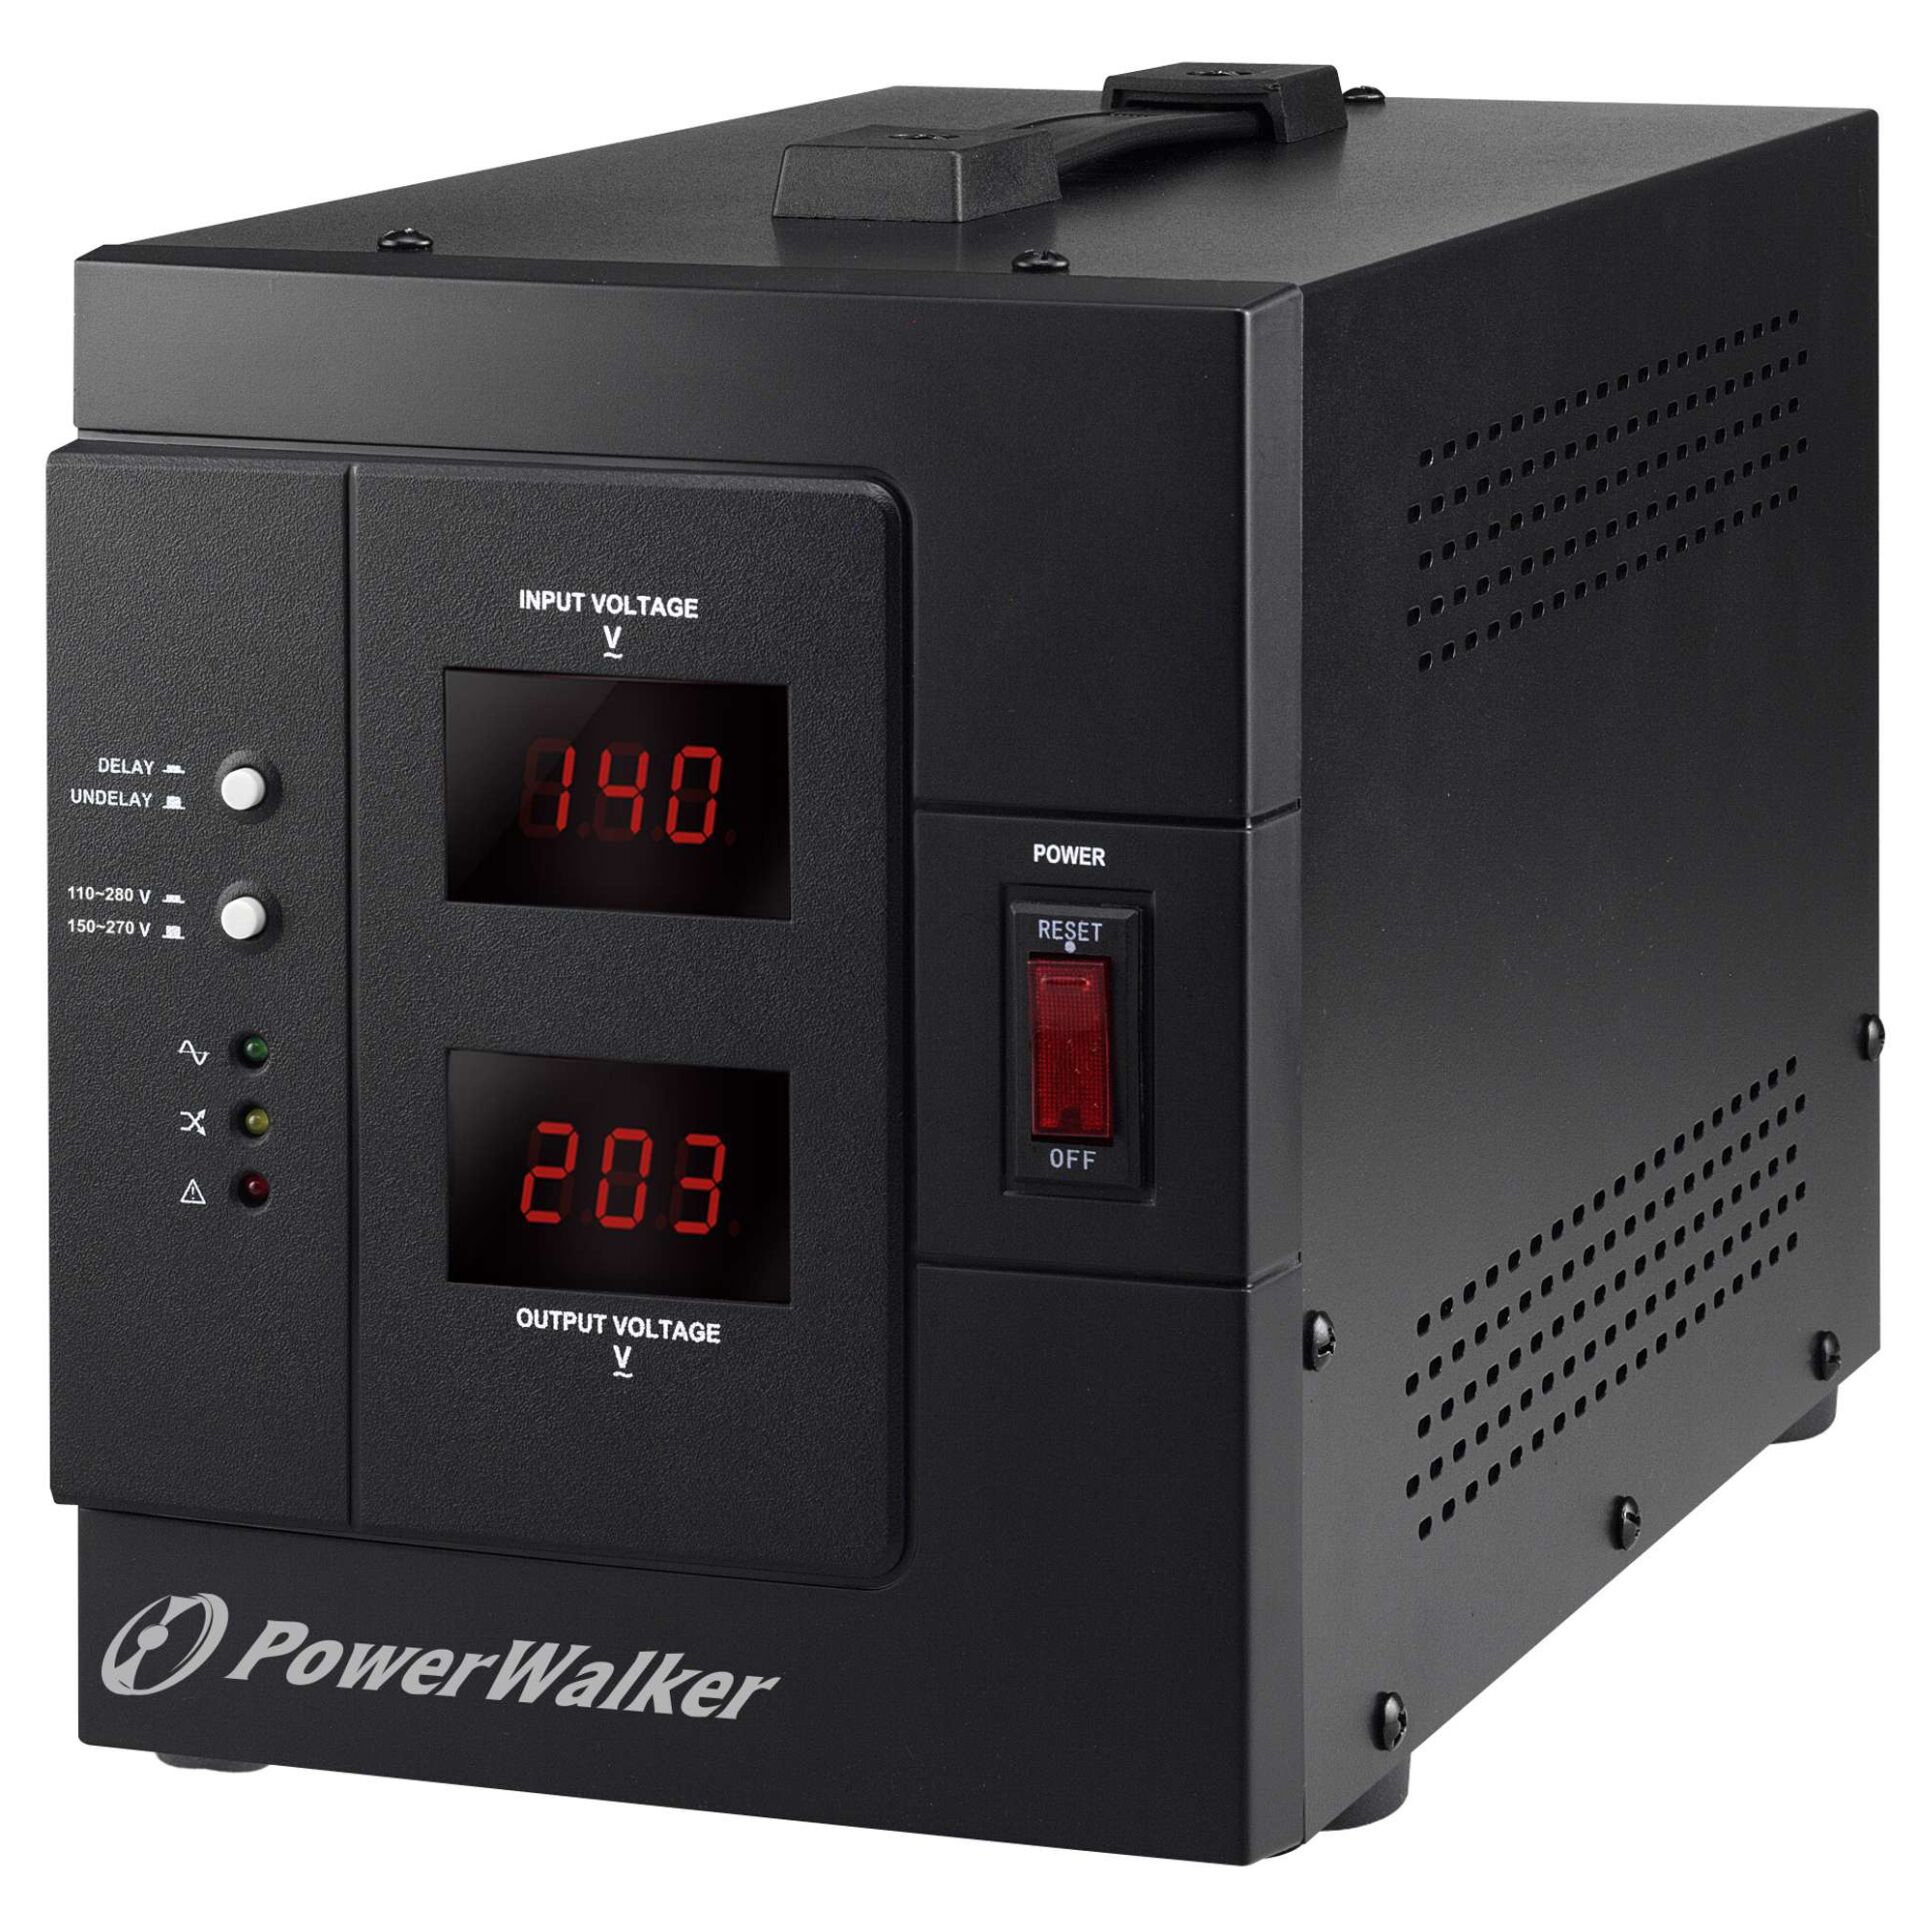 PowerWalker AVR 3000 SIV FR automatic voltage regulator